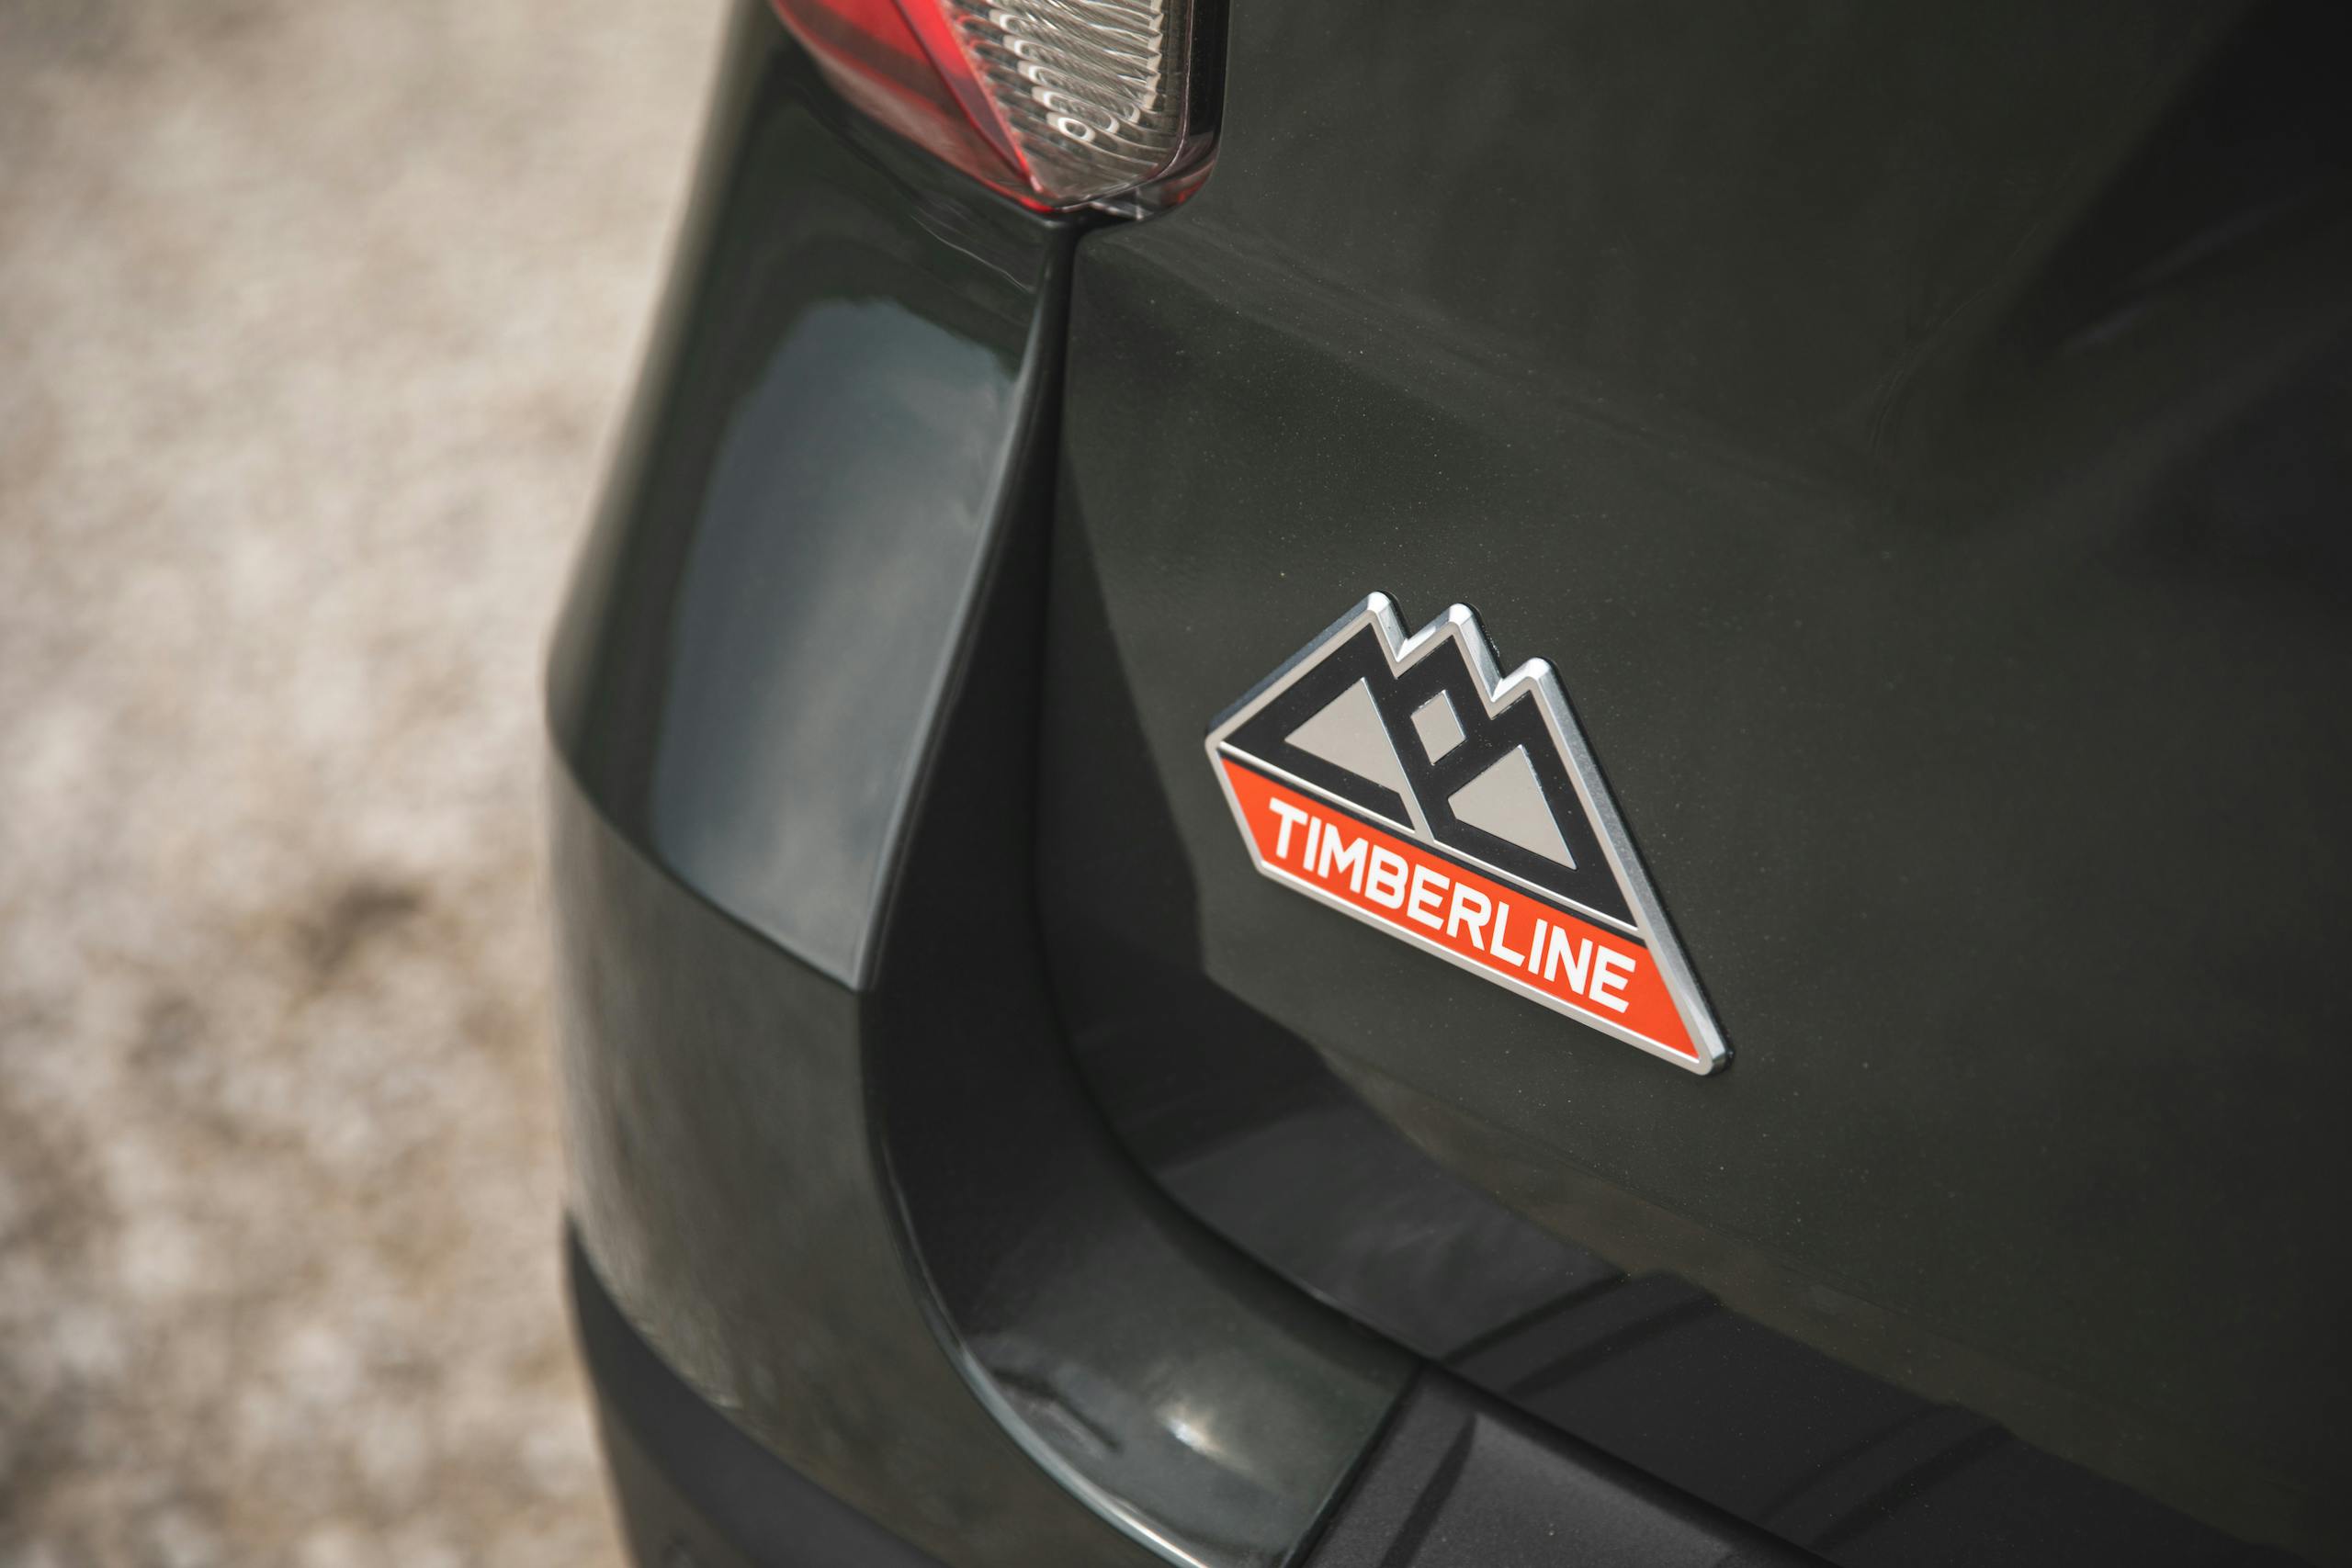 Ford Explorer Timberline badge